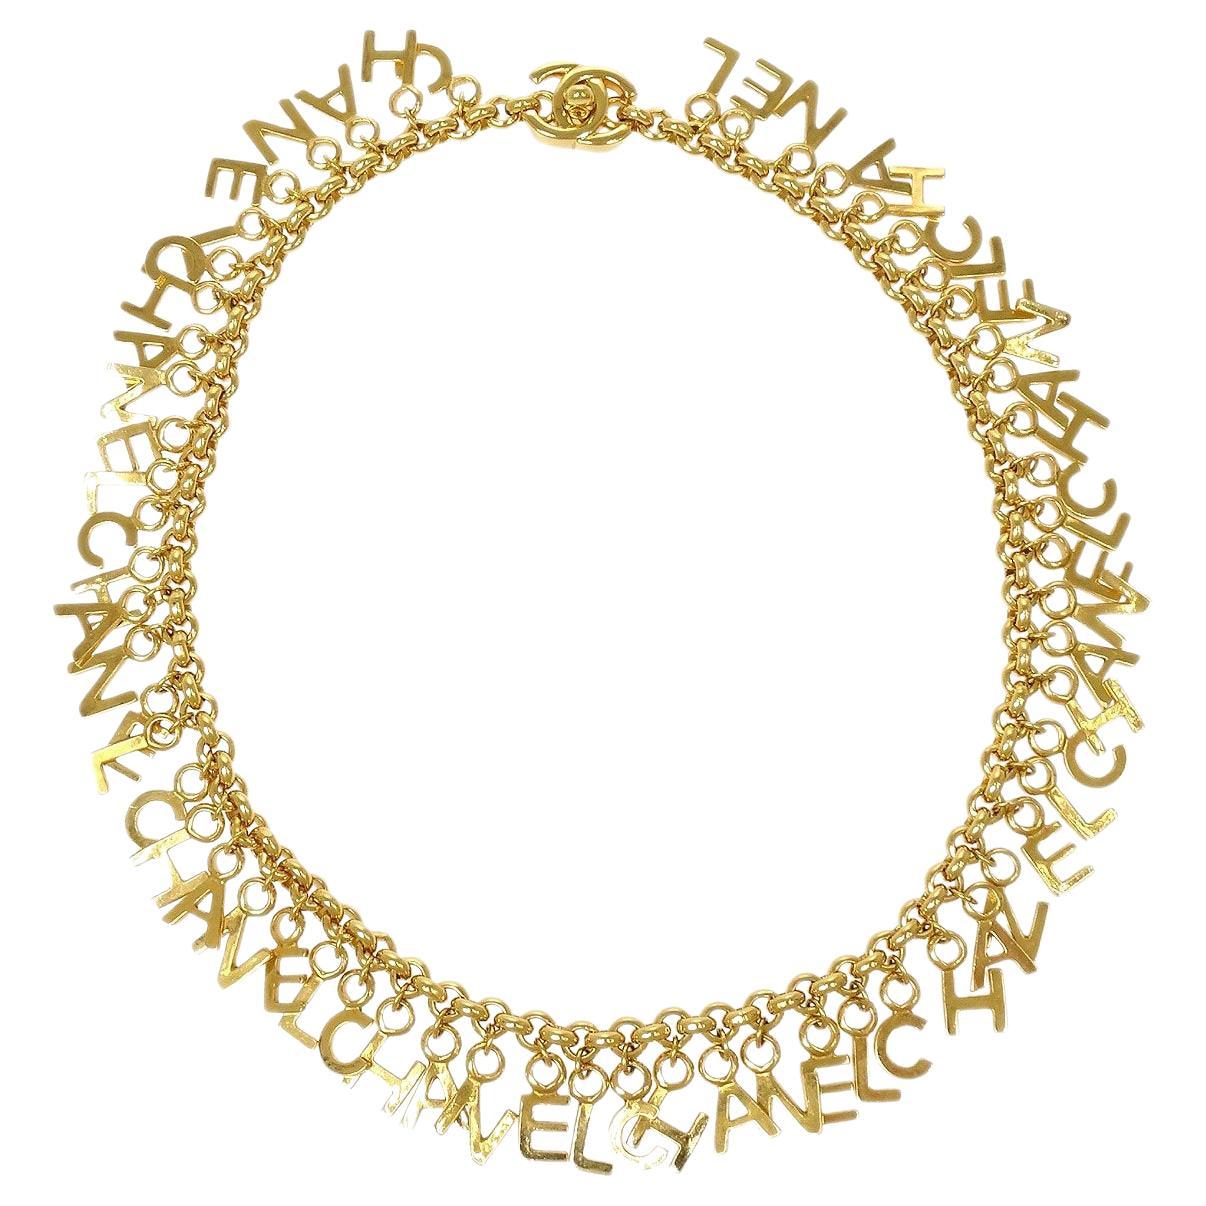 CHANEL 'CHANEL' Gold Metallkette Logo Choker-Halskette